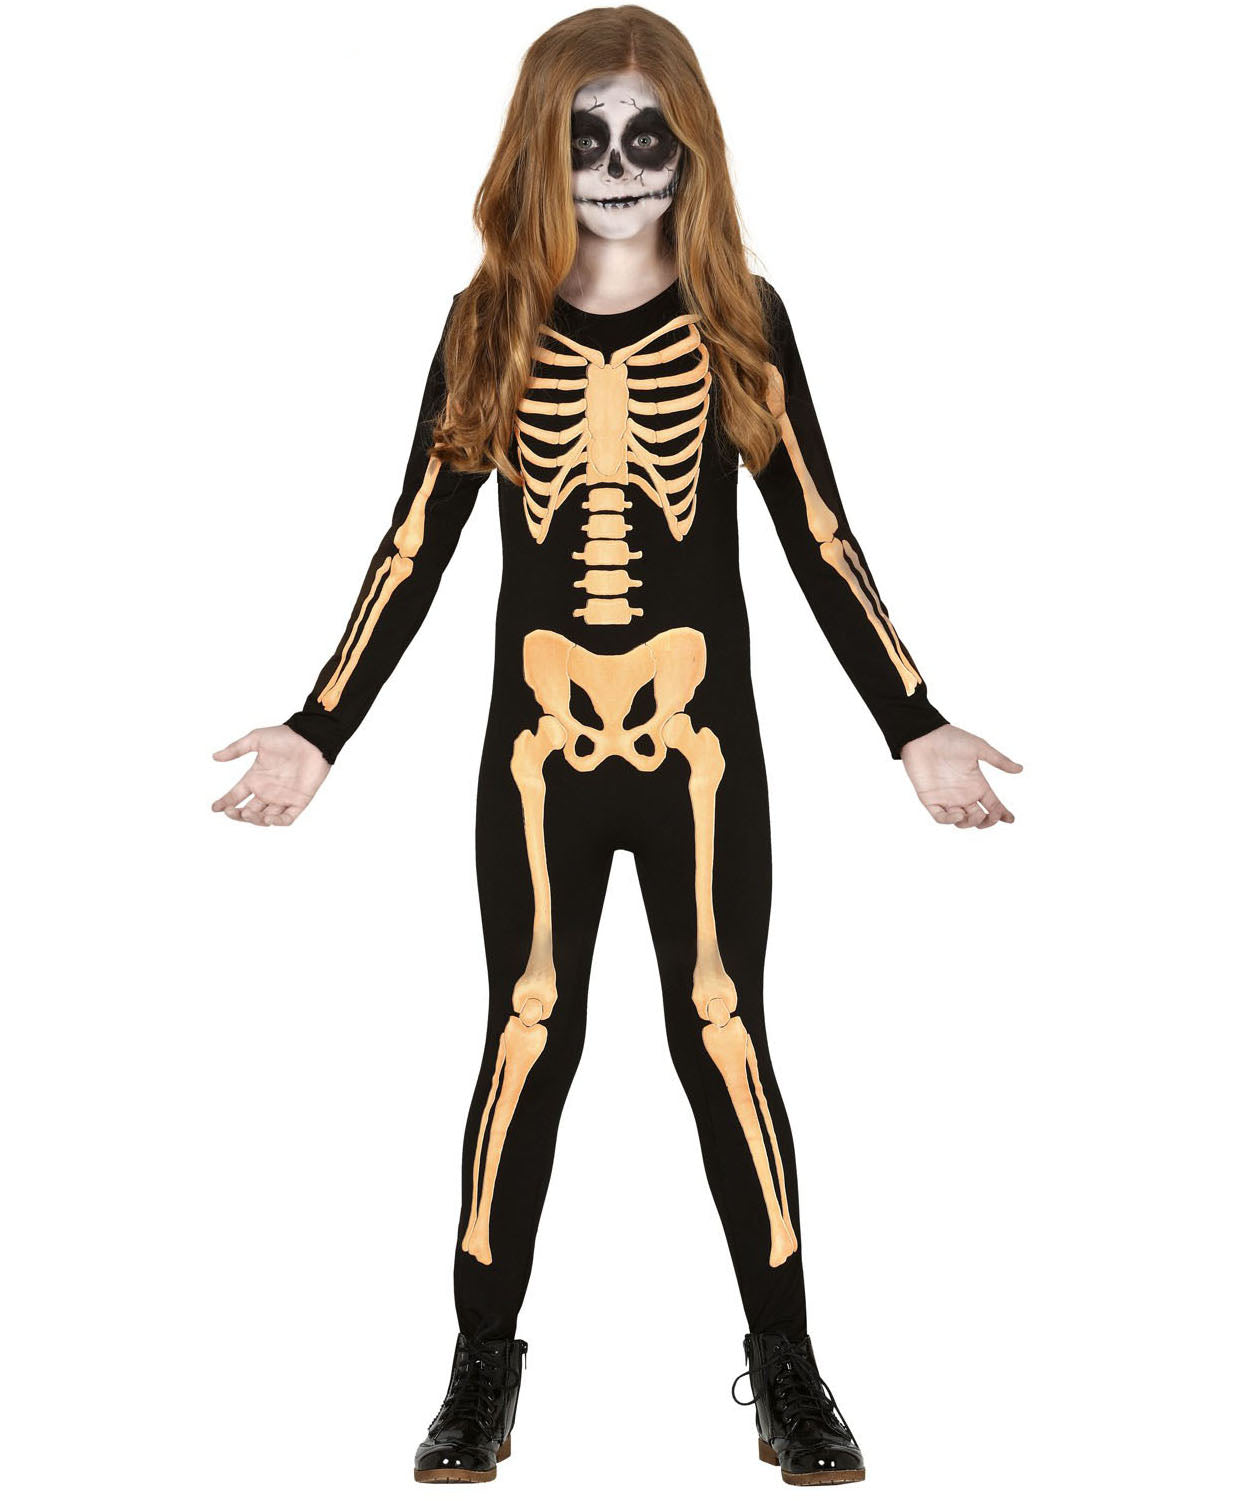 Child Skeleton Jumpsuit, Age 3-4 years